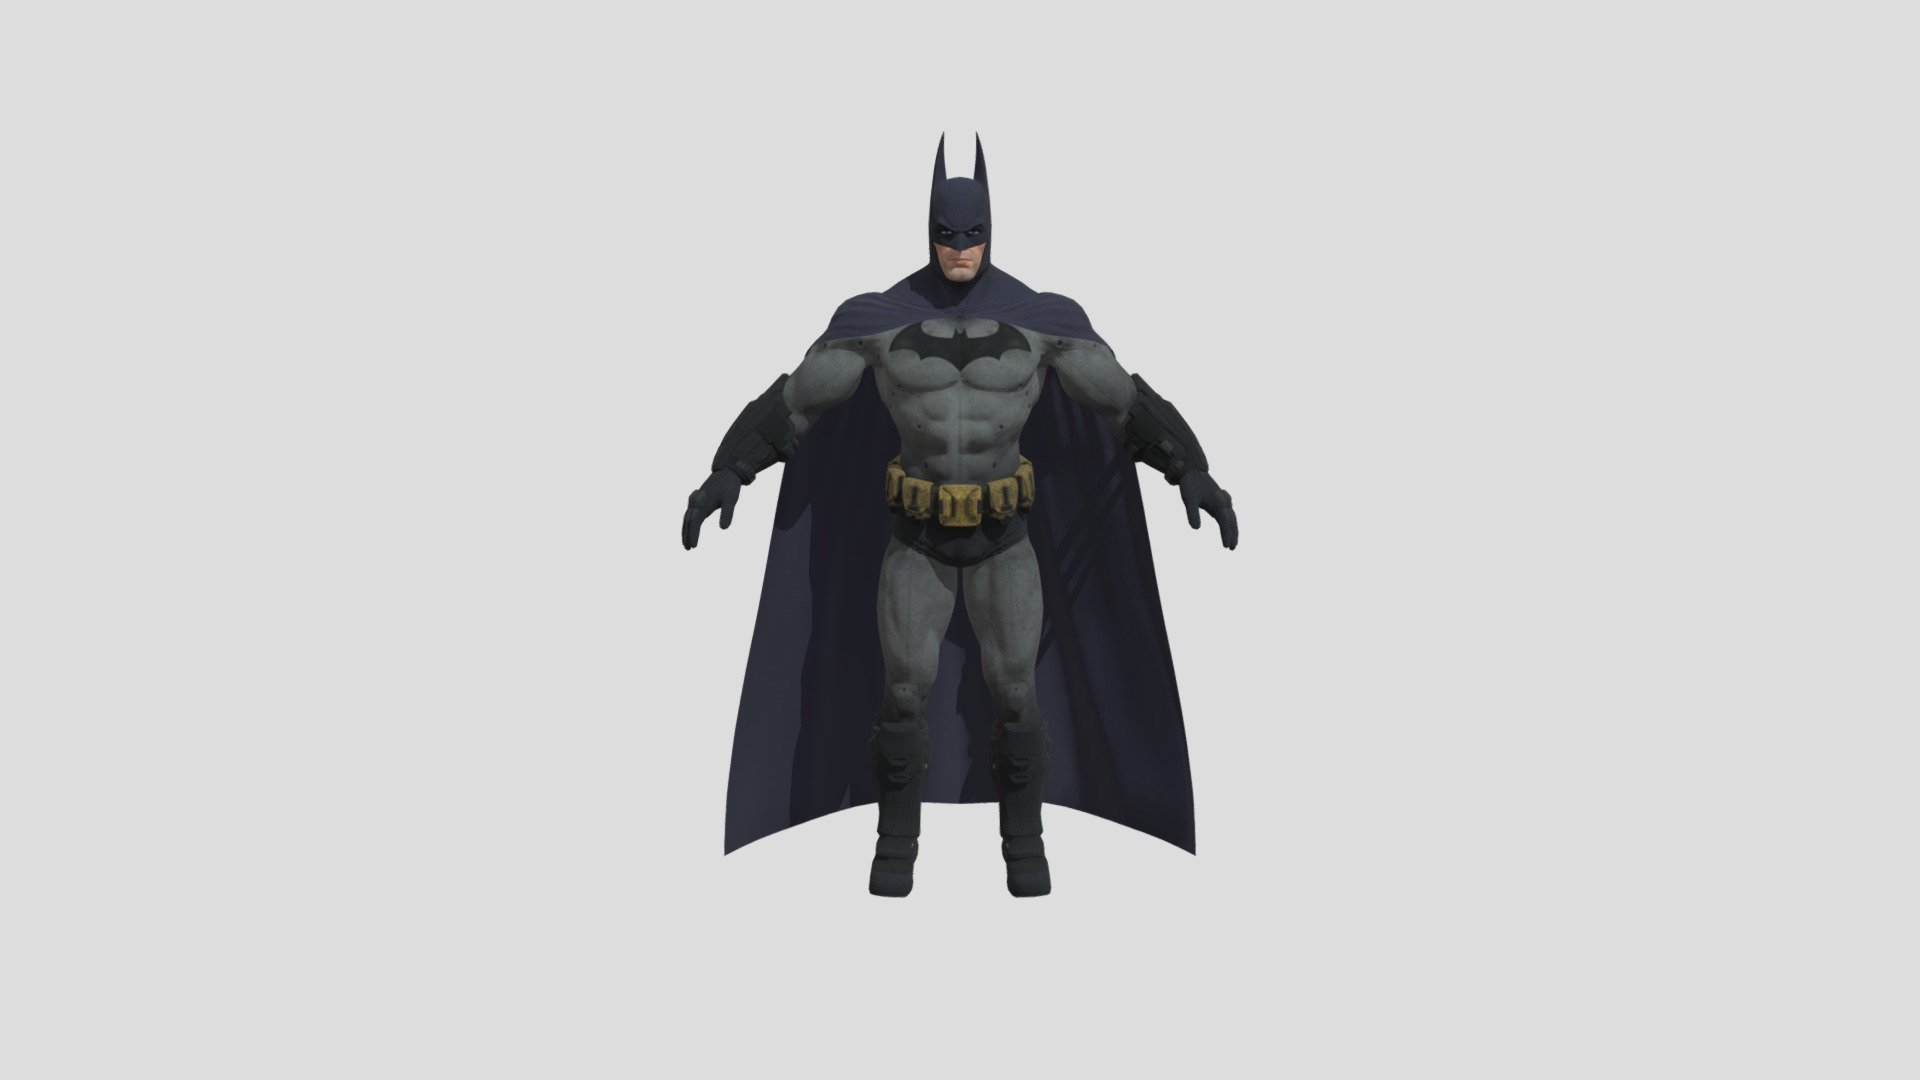 Batman Arkham City: Batman 3D model free download by E.W. amazing games for Unity and Unreal Engine! - Batman Arkham City: Batman - Download Free 3D model by EWTube0 3d model